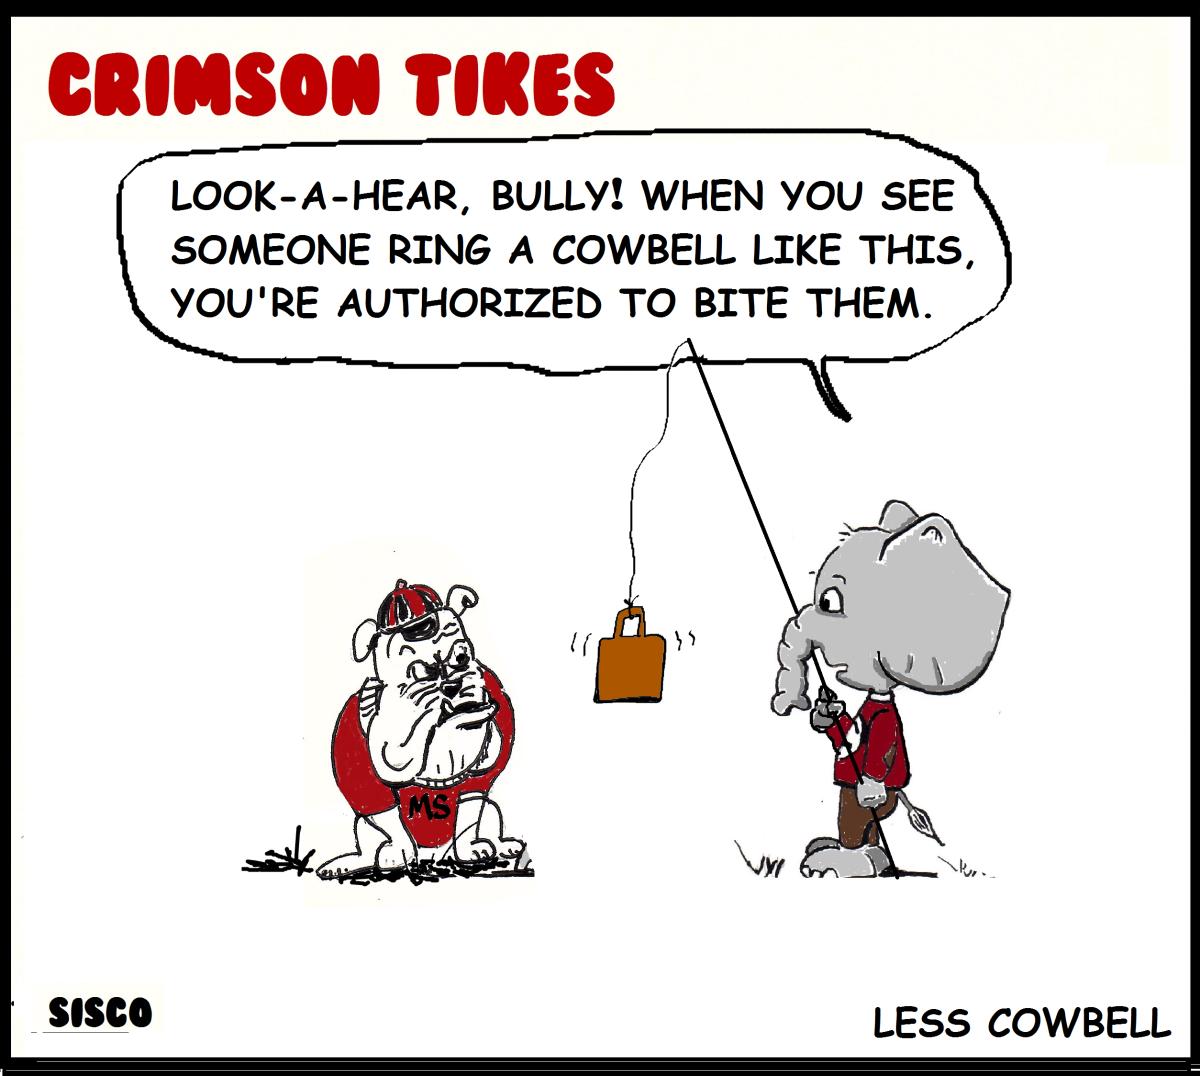 Crimson Tikes: Less Cowbell